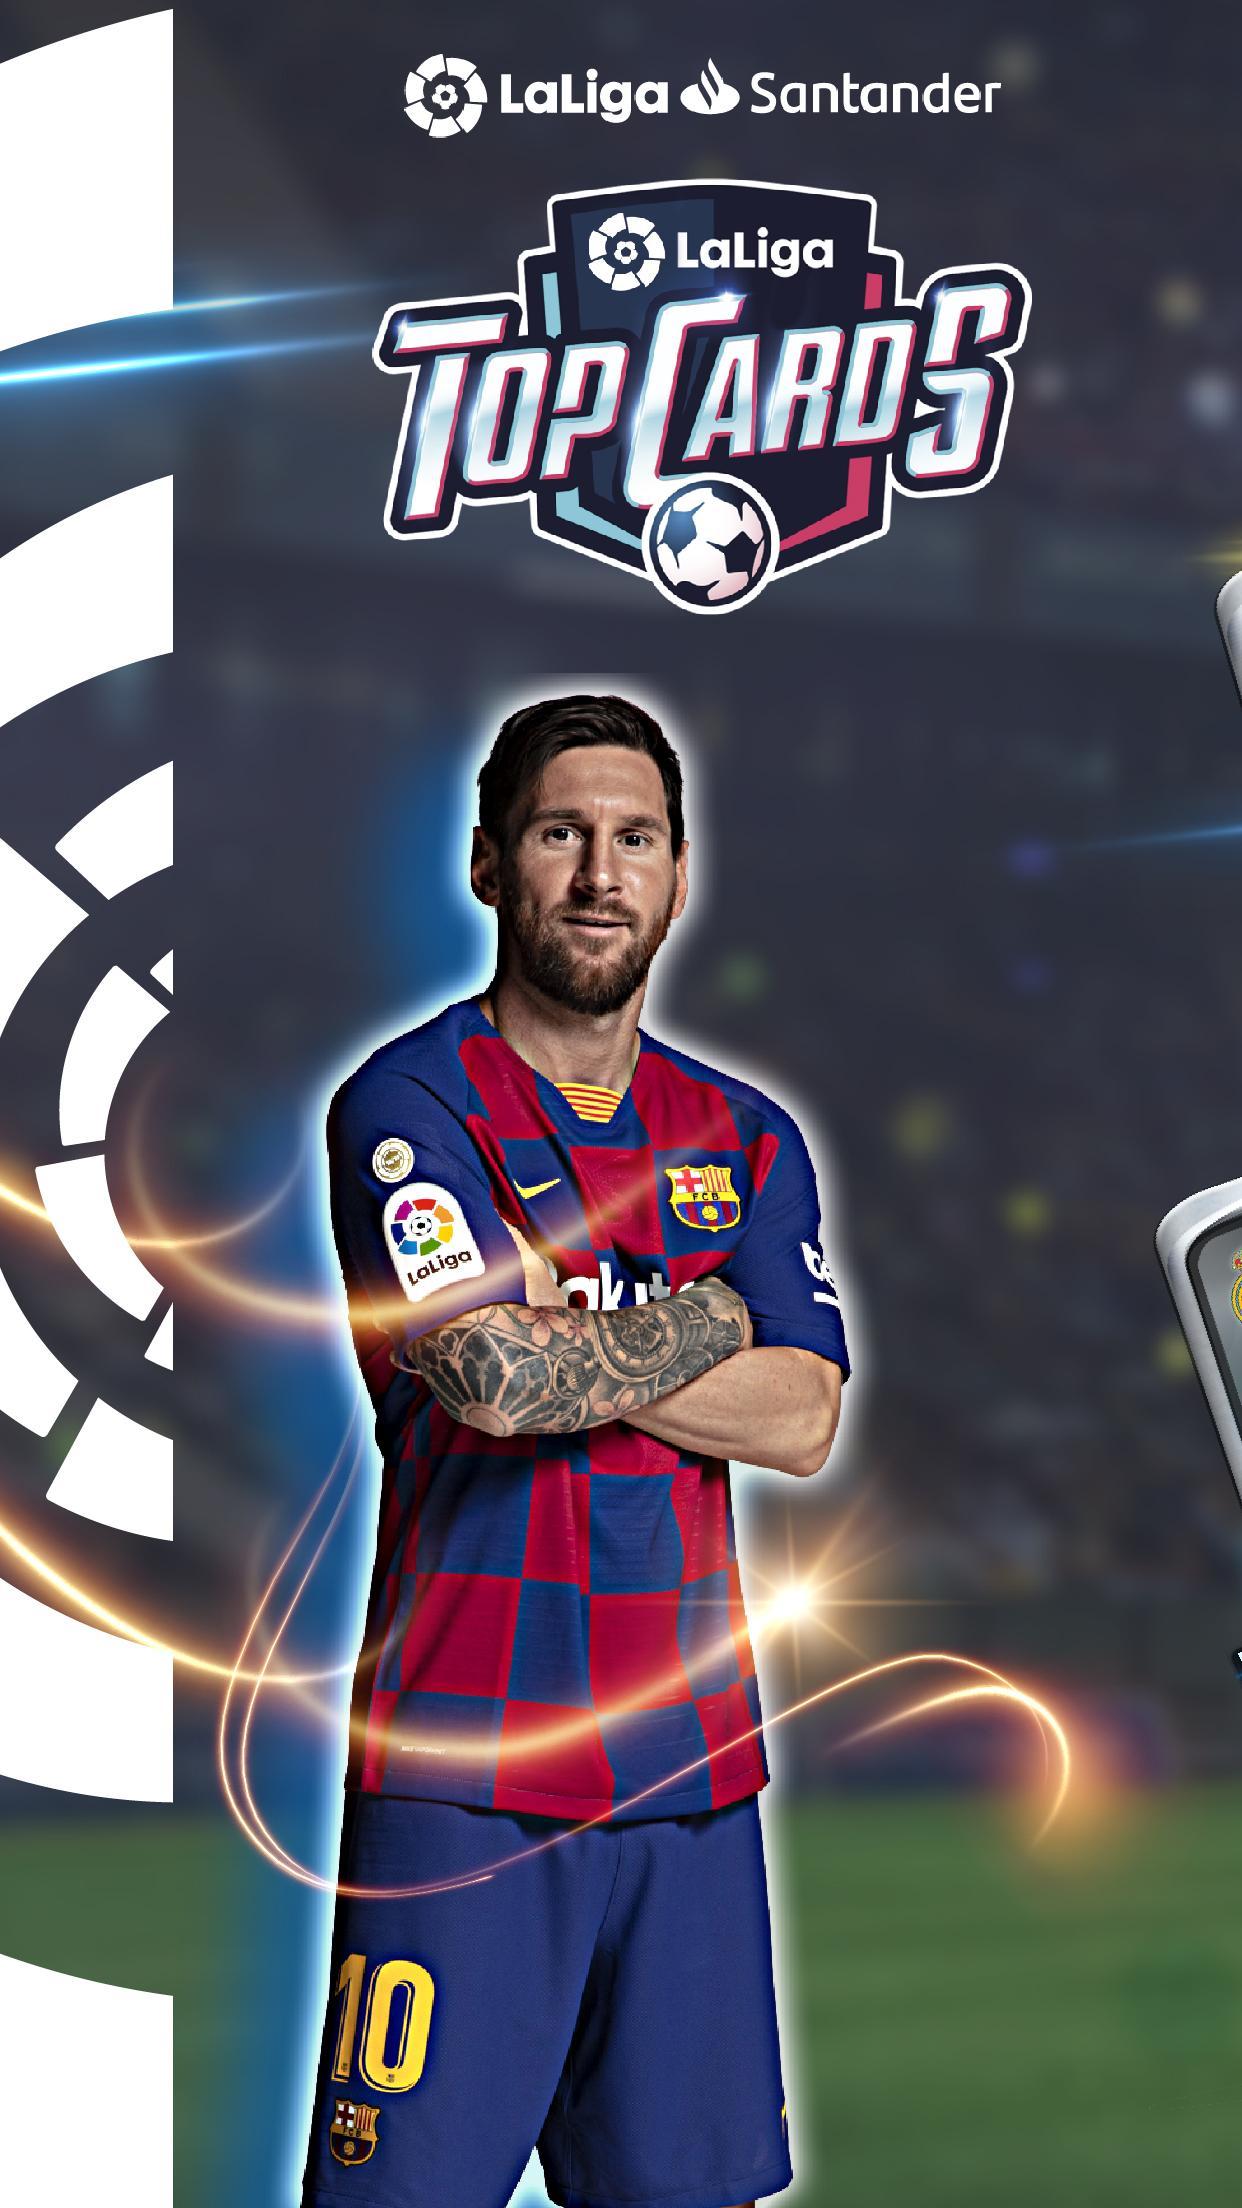 LaLiga Top Cards 2020 - Soccer Card Battle Game 4.1.4 Screenshot 1